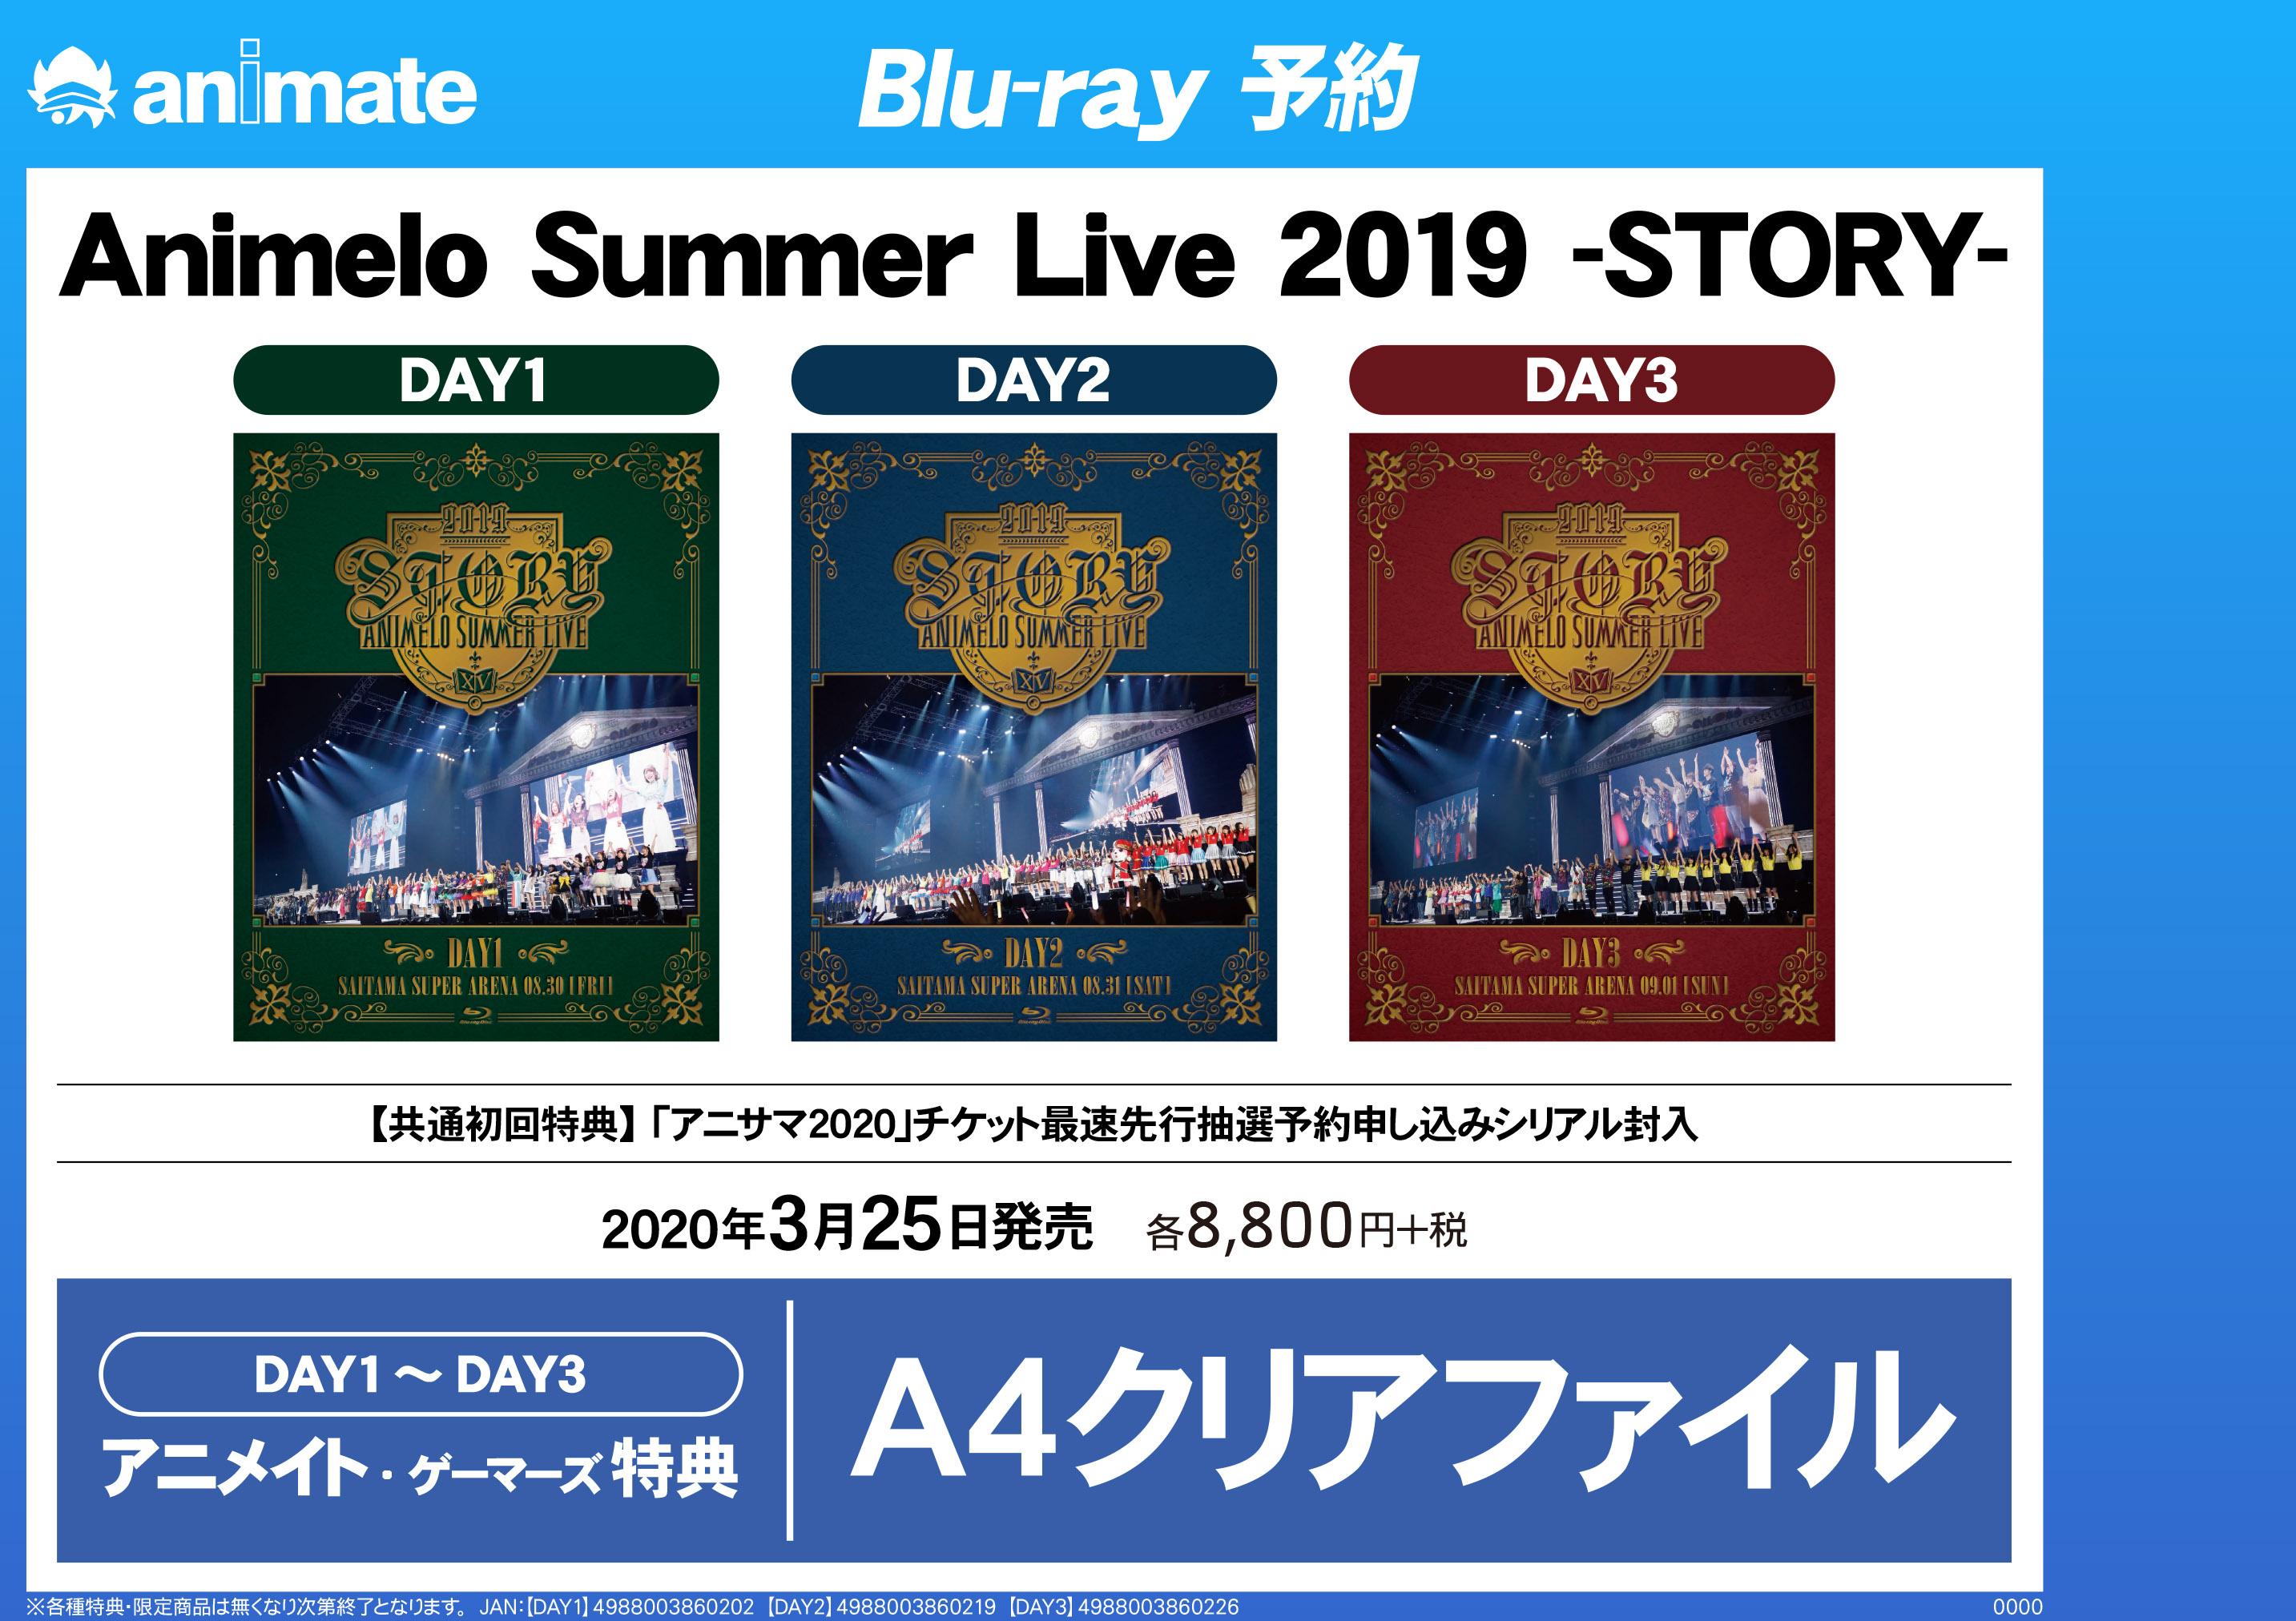 Animelo Summer Live 19 Story Blu Ray予約受付中 アニメイト岡山